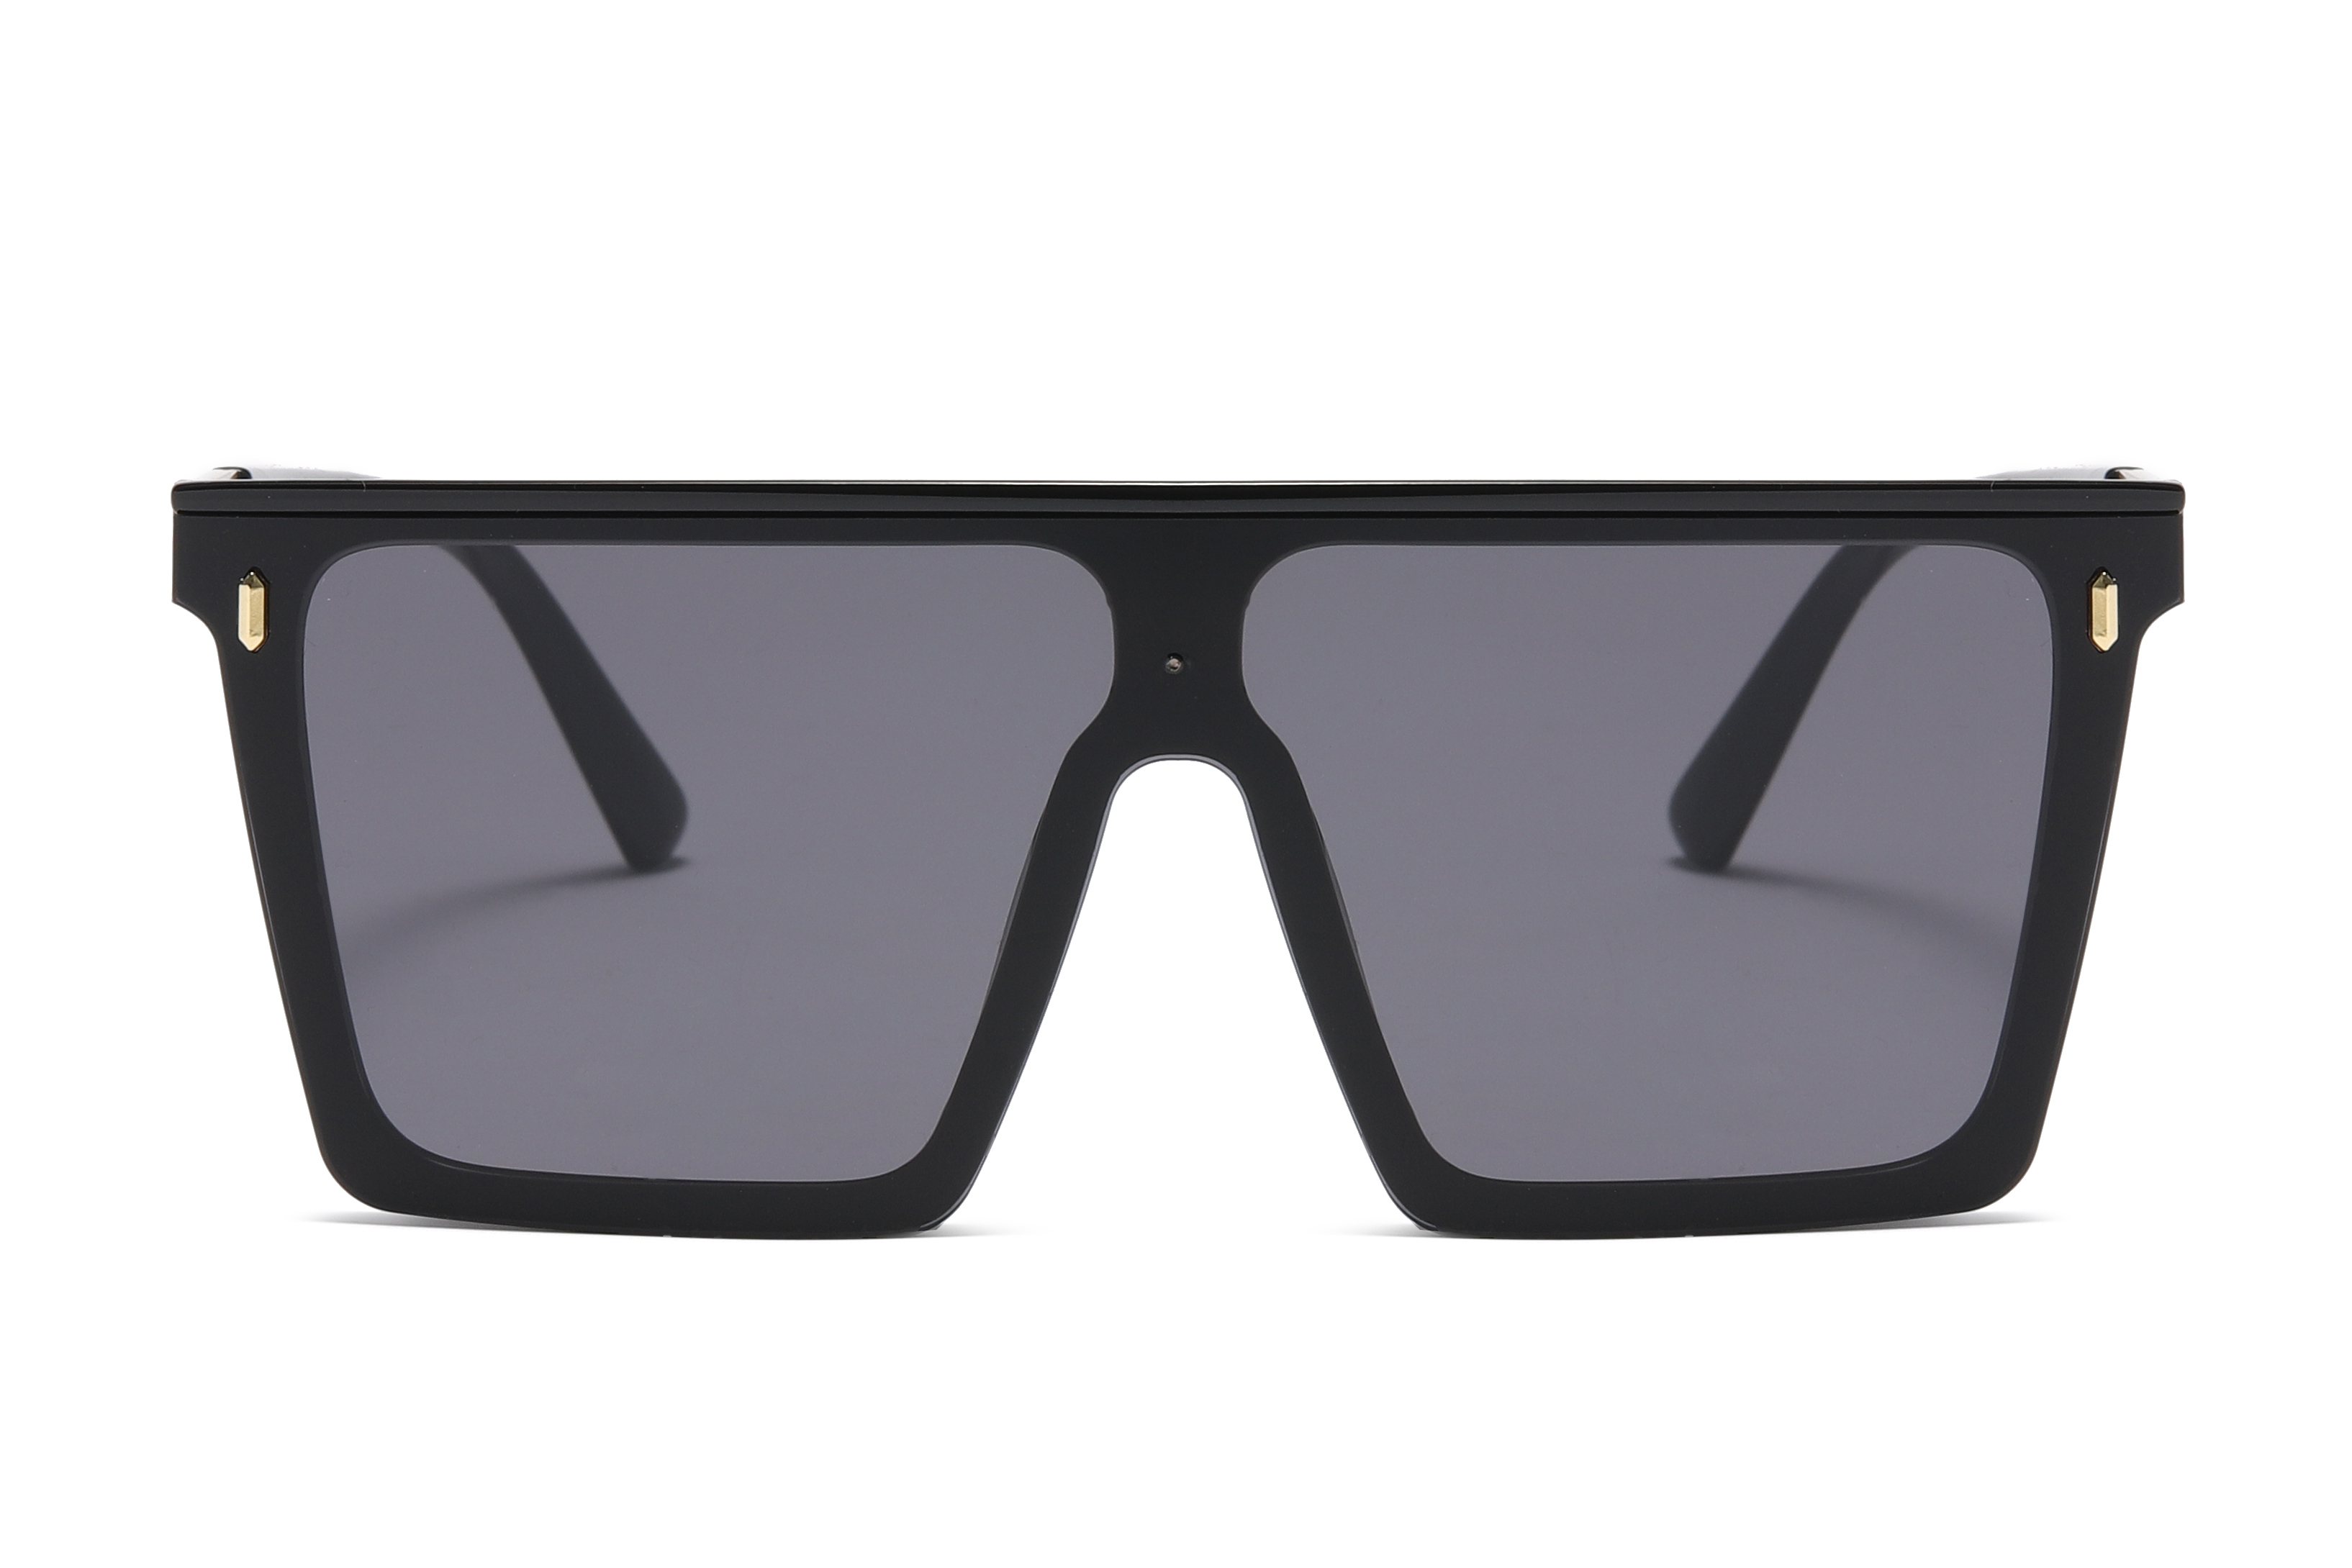 Designed Big Size Fashion PC Sunglasses 81804